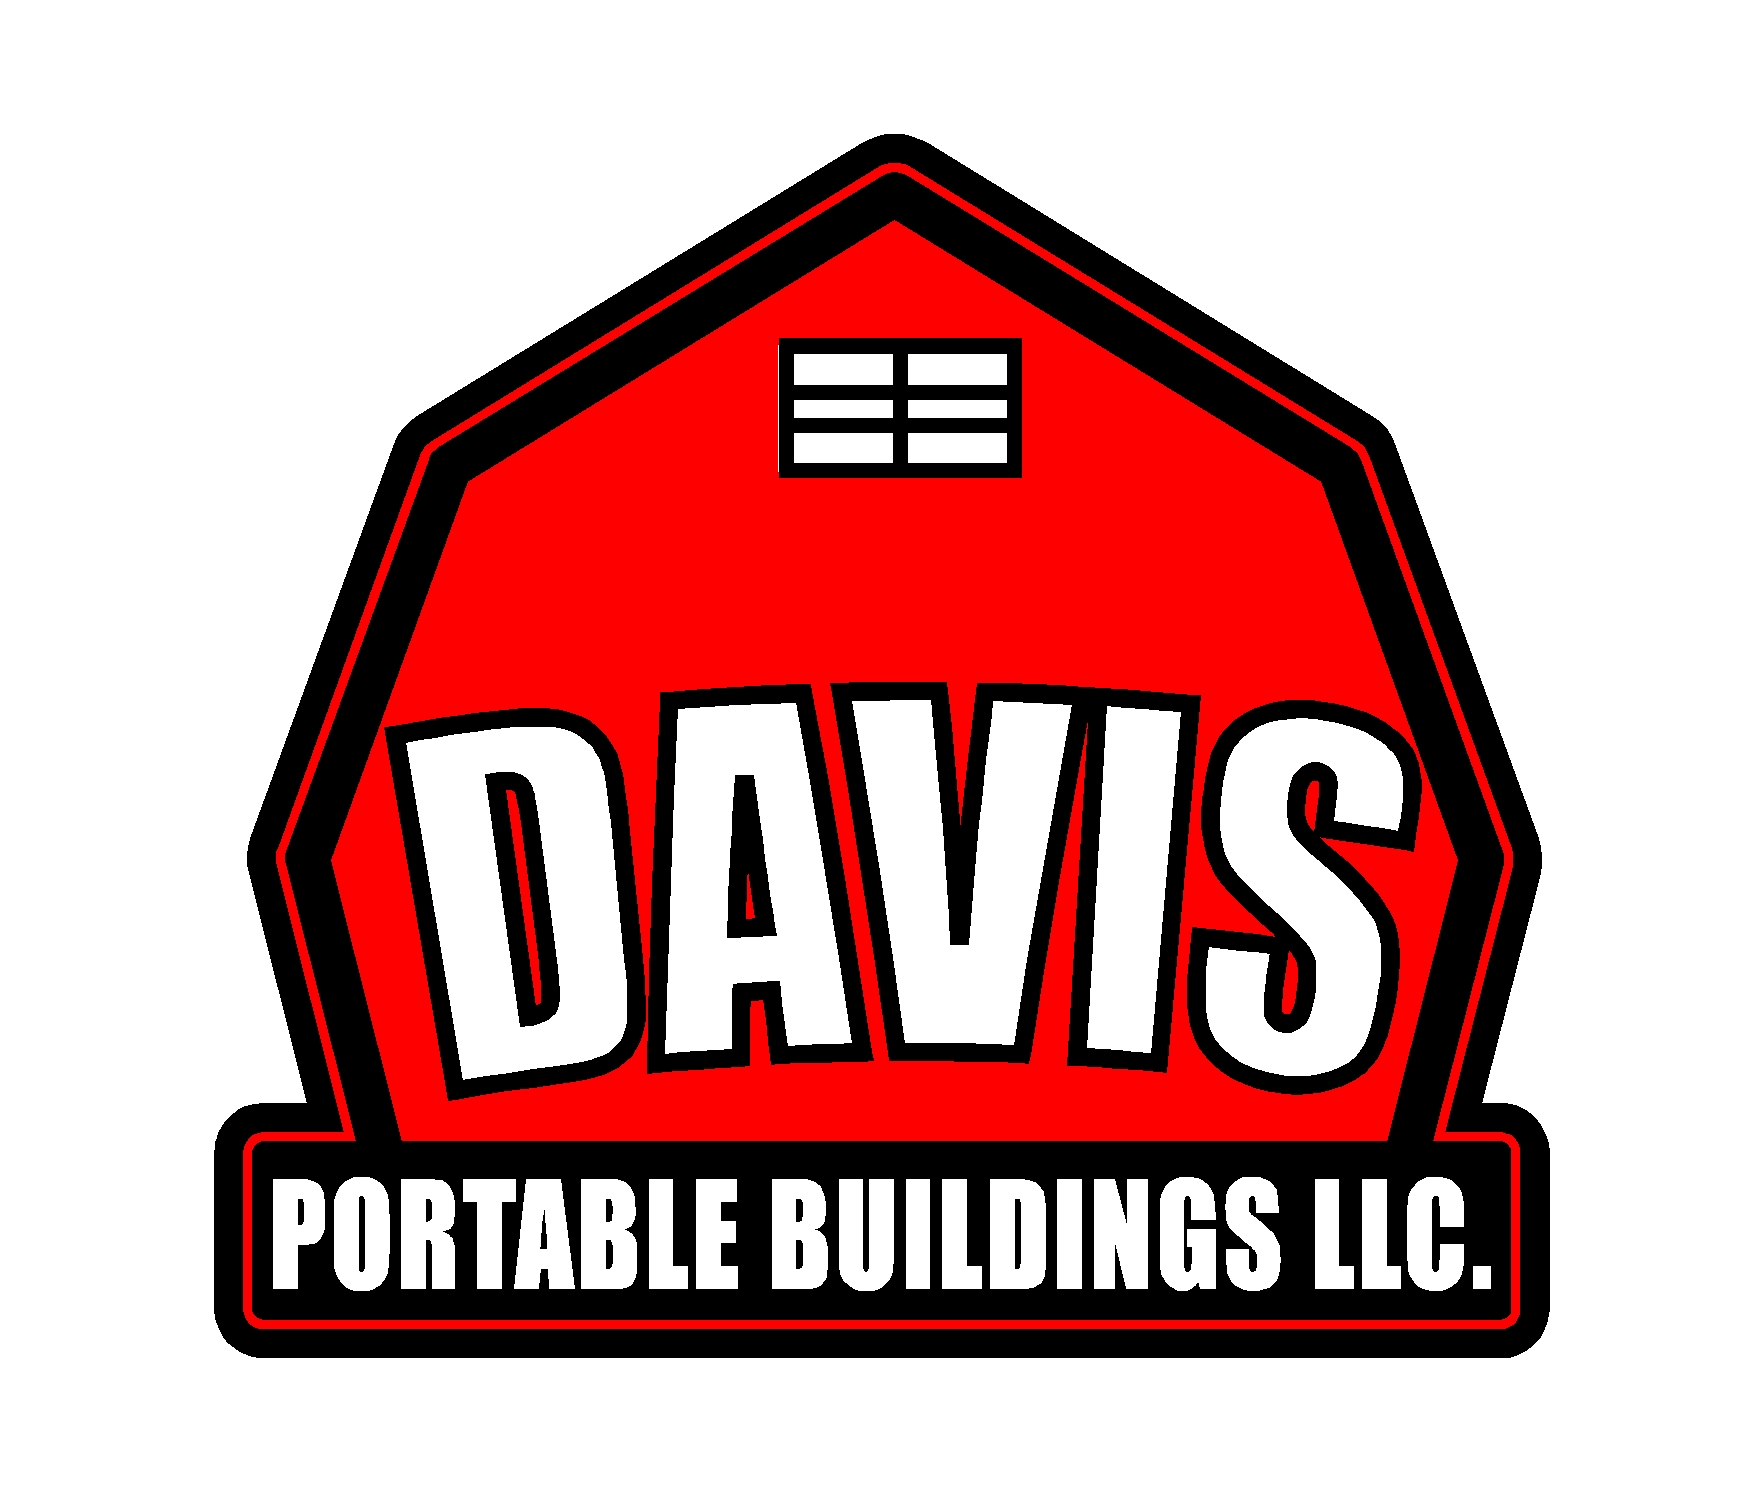 Why Choose Davis Portable Buildings